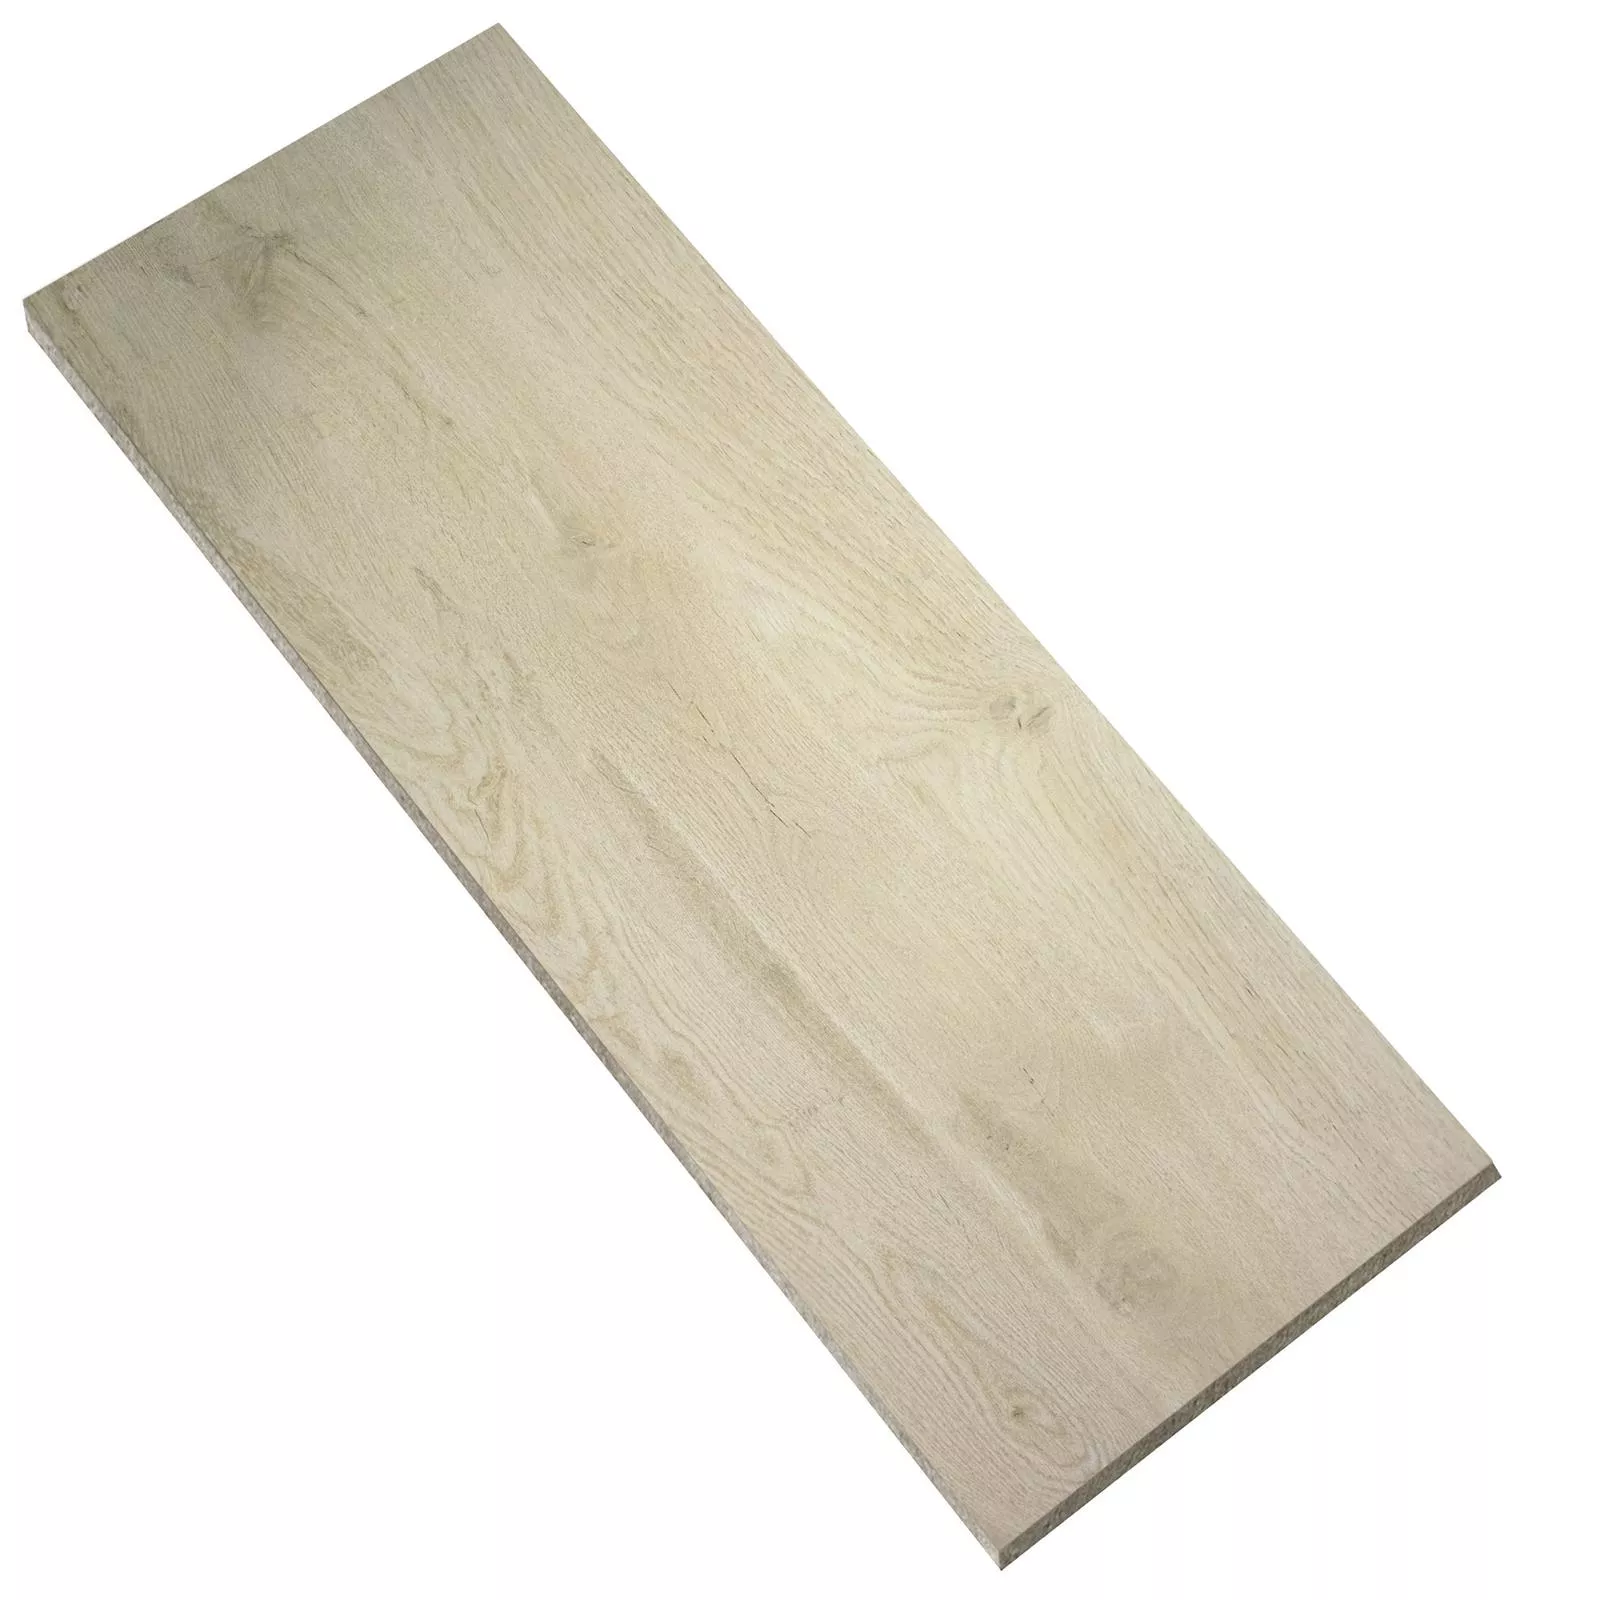 Sample Floor Tiles Wood Optic Linsburg Beige 30x120cm